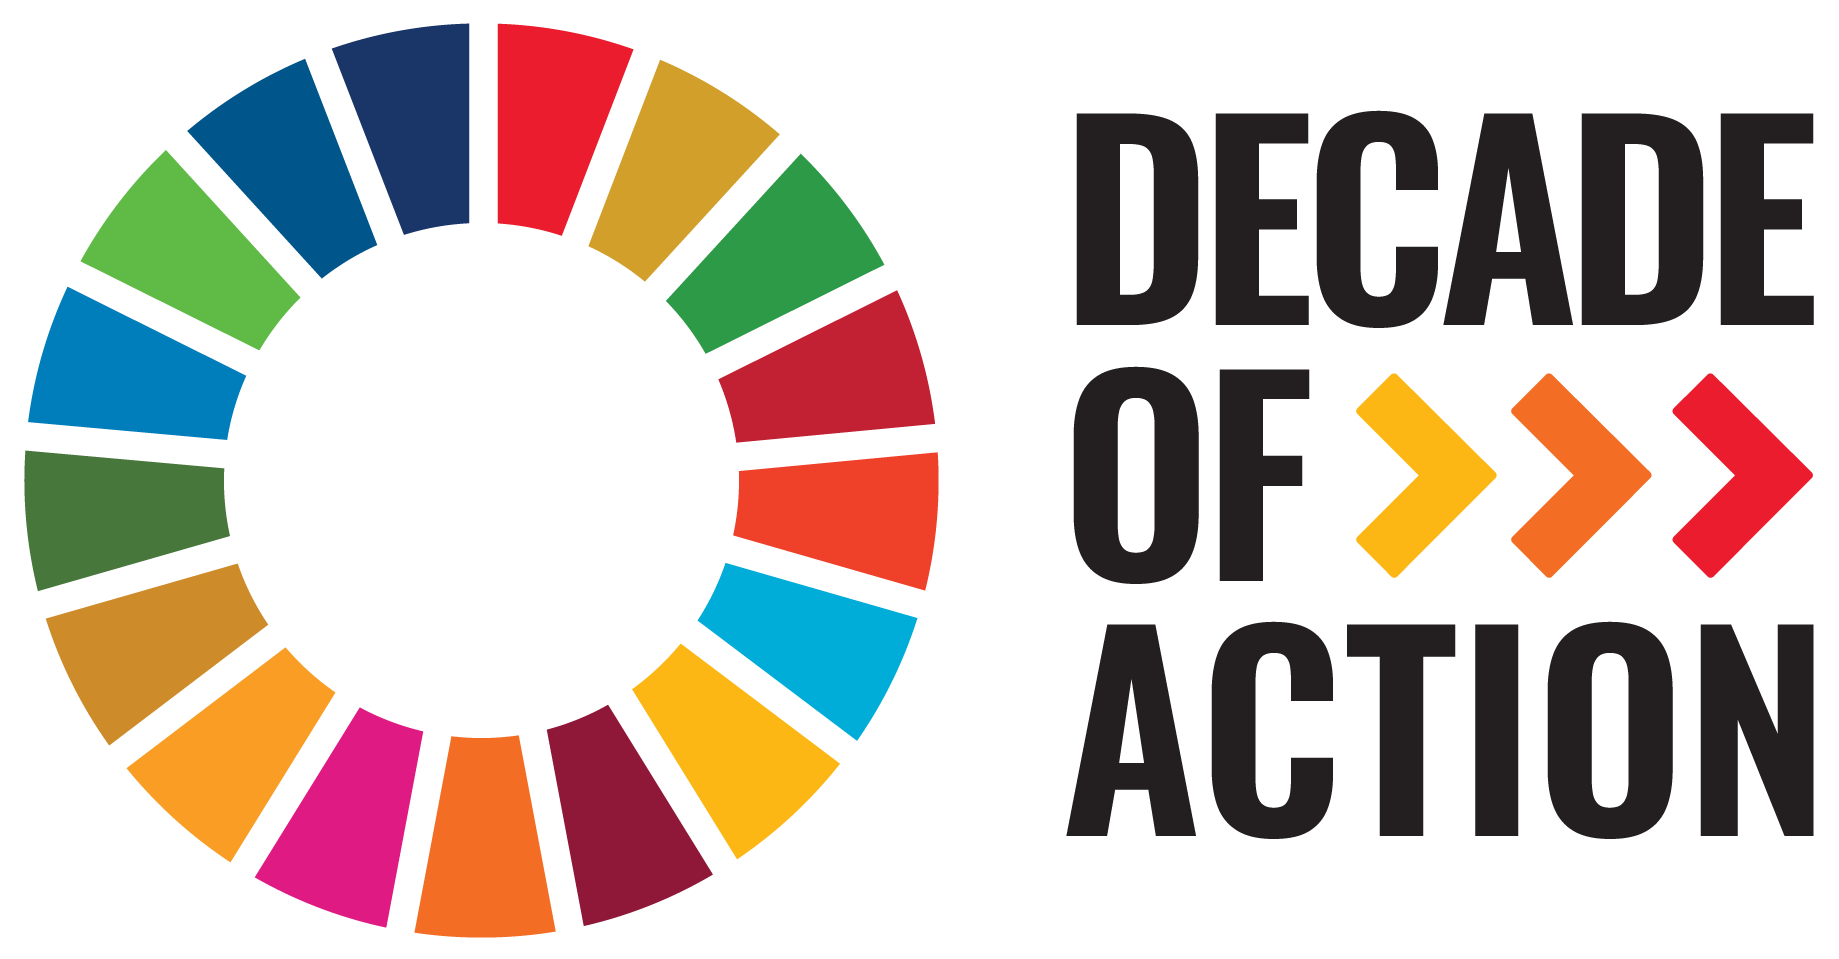 SDG Action